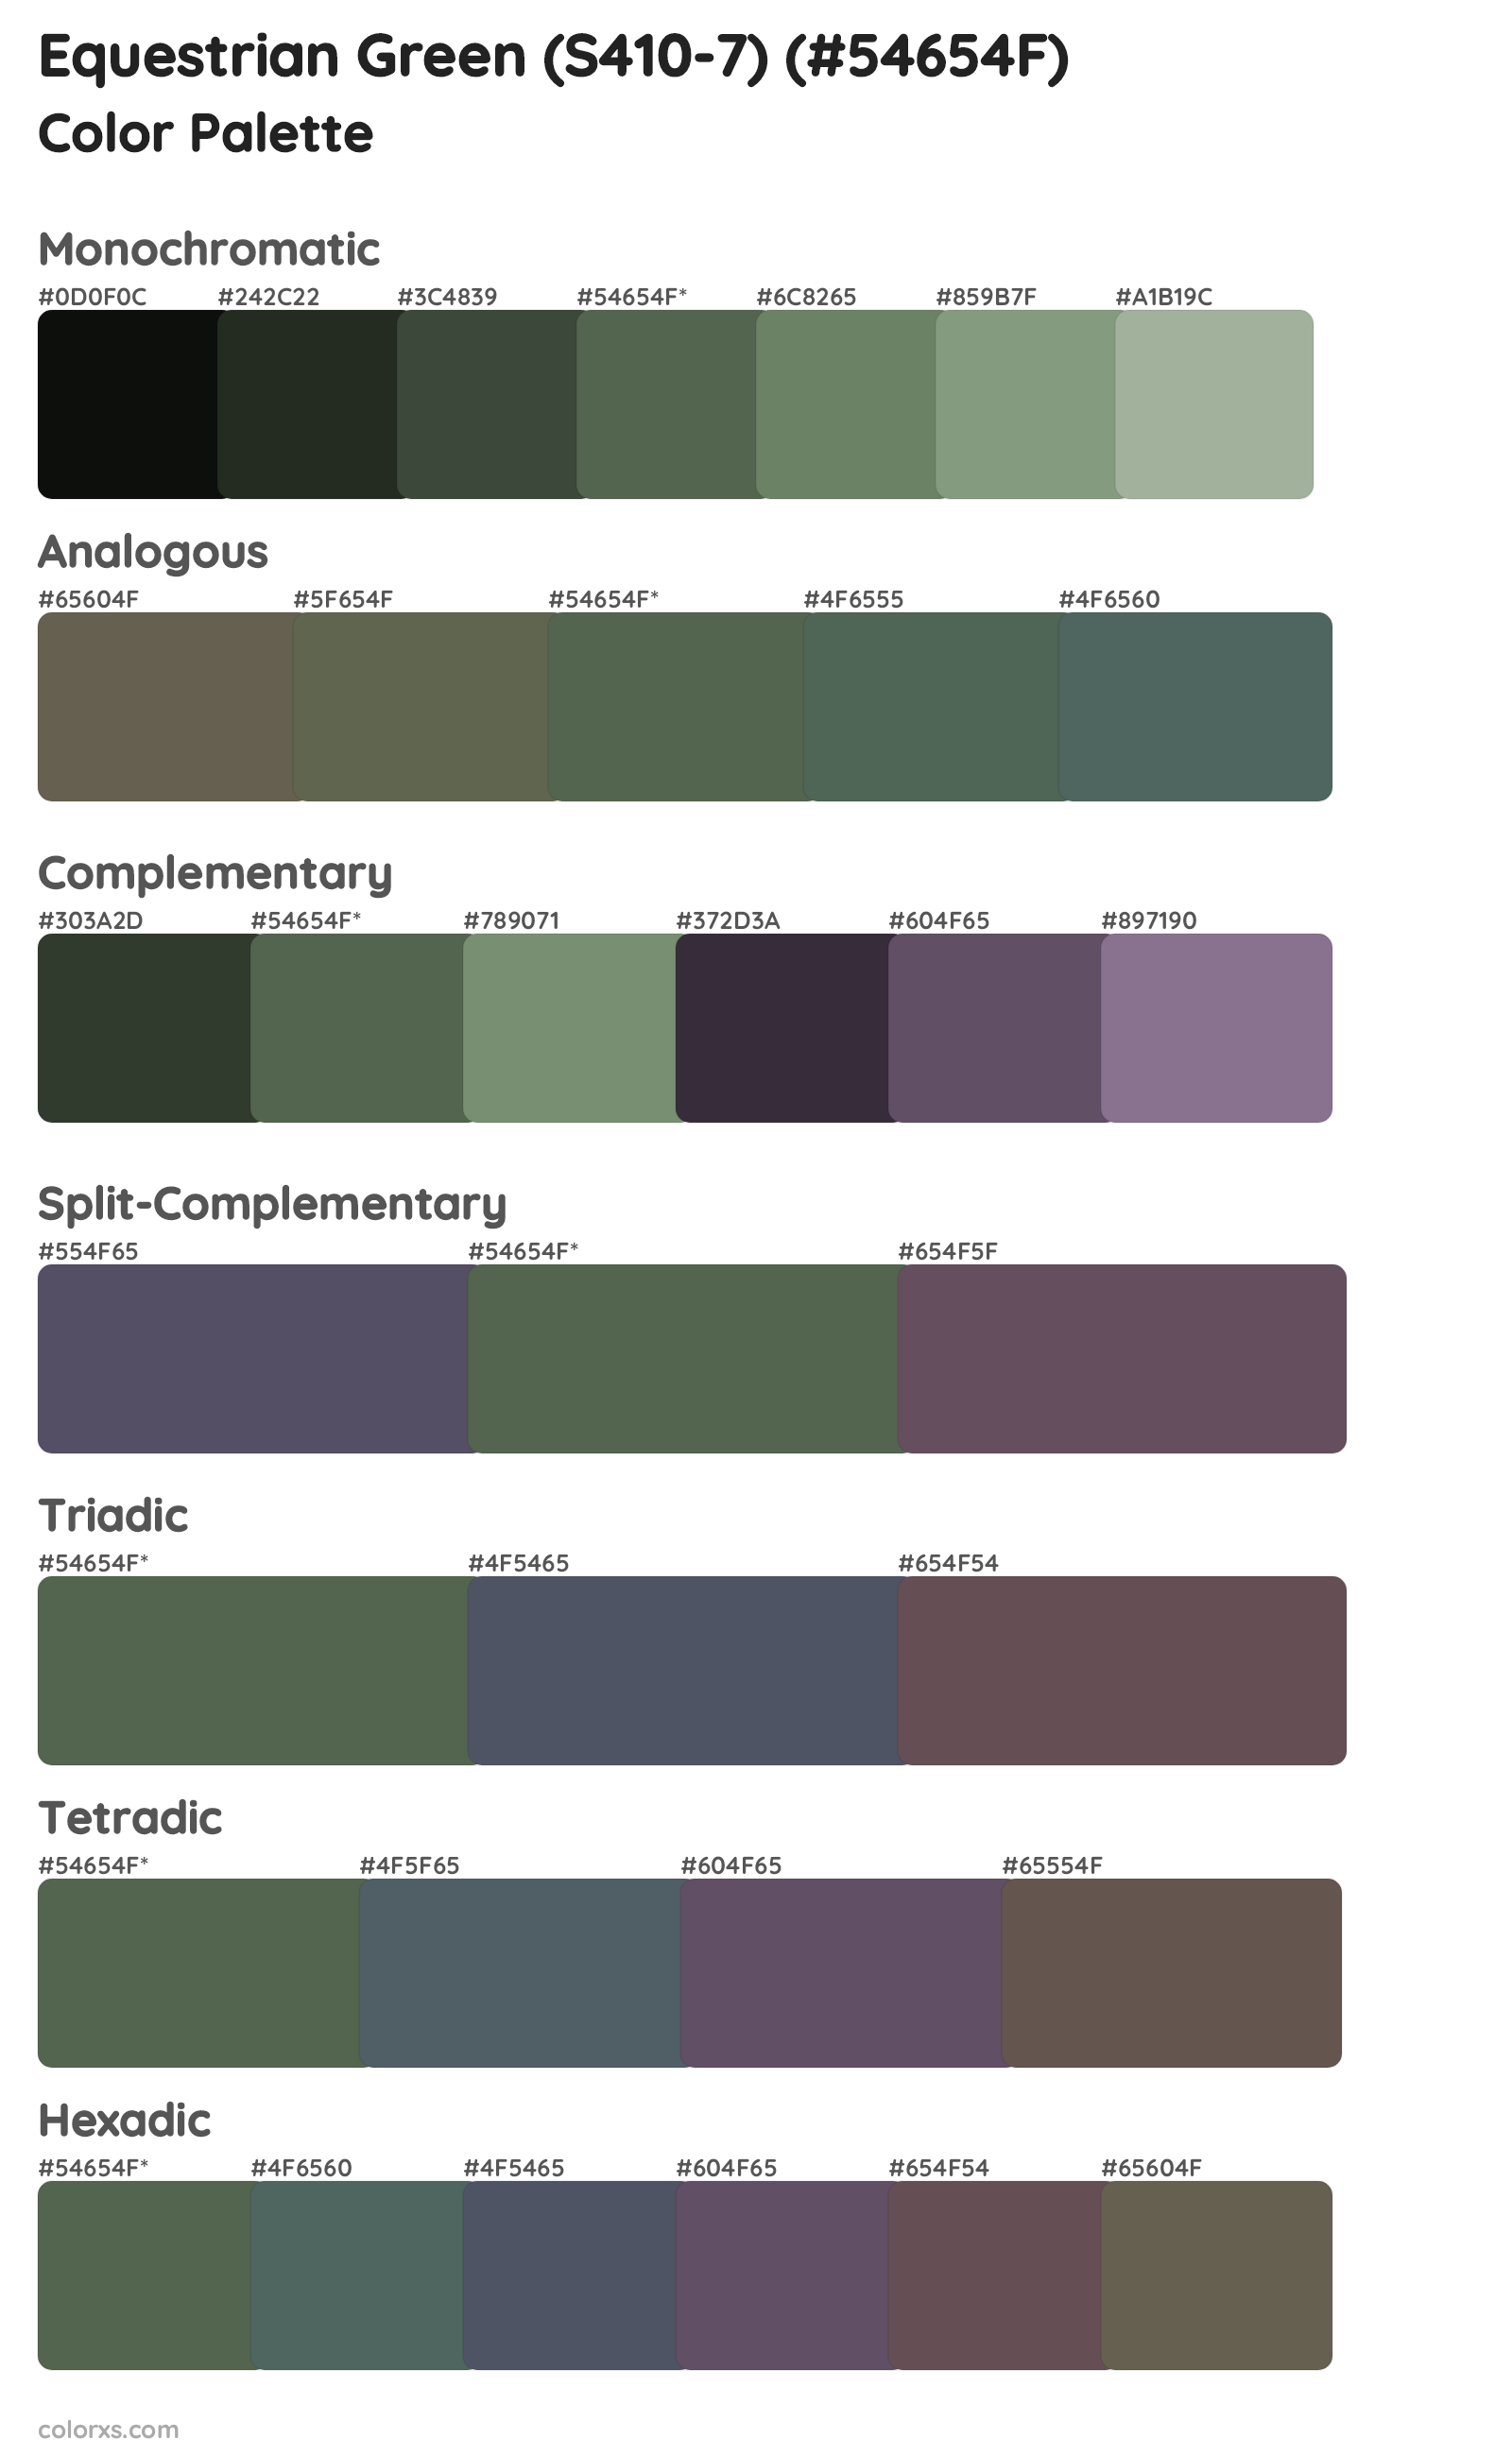 Equestrian Green (S410-7) Color Scheme Palettes